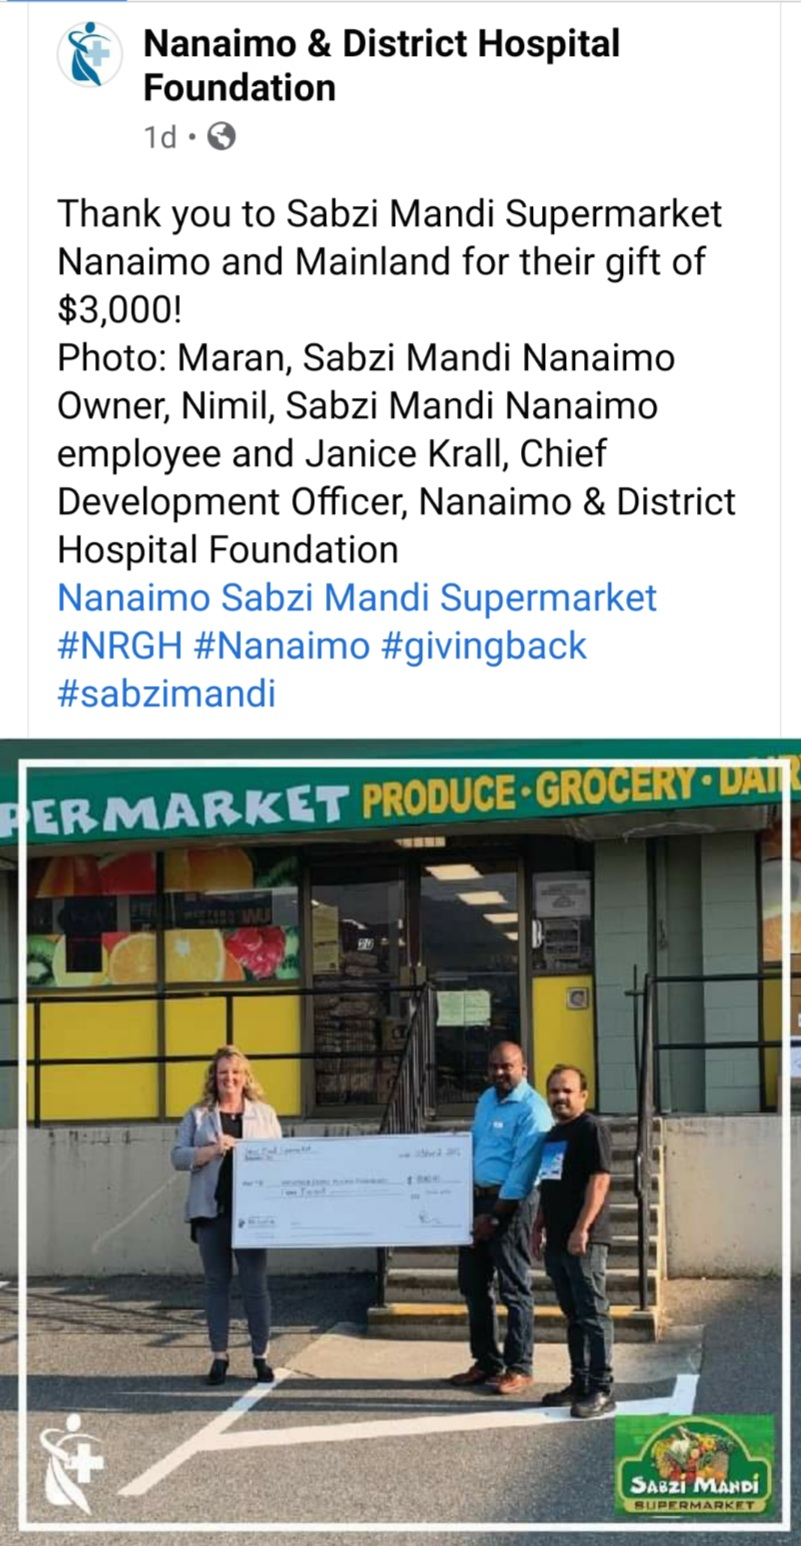 Nanaimo & District Hospital Foundation